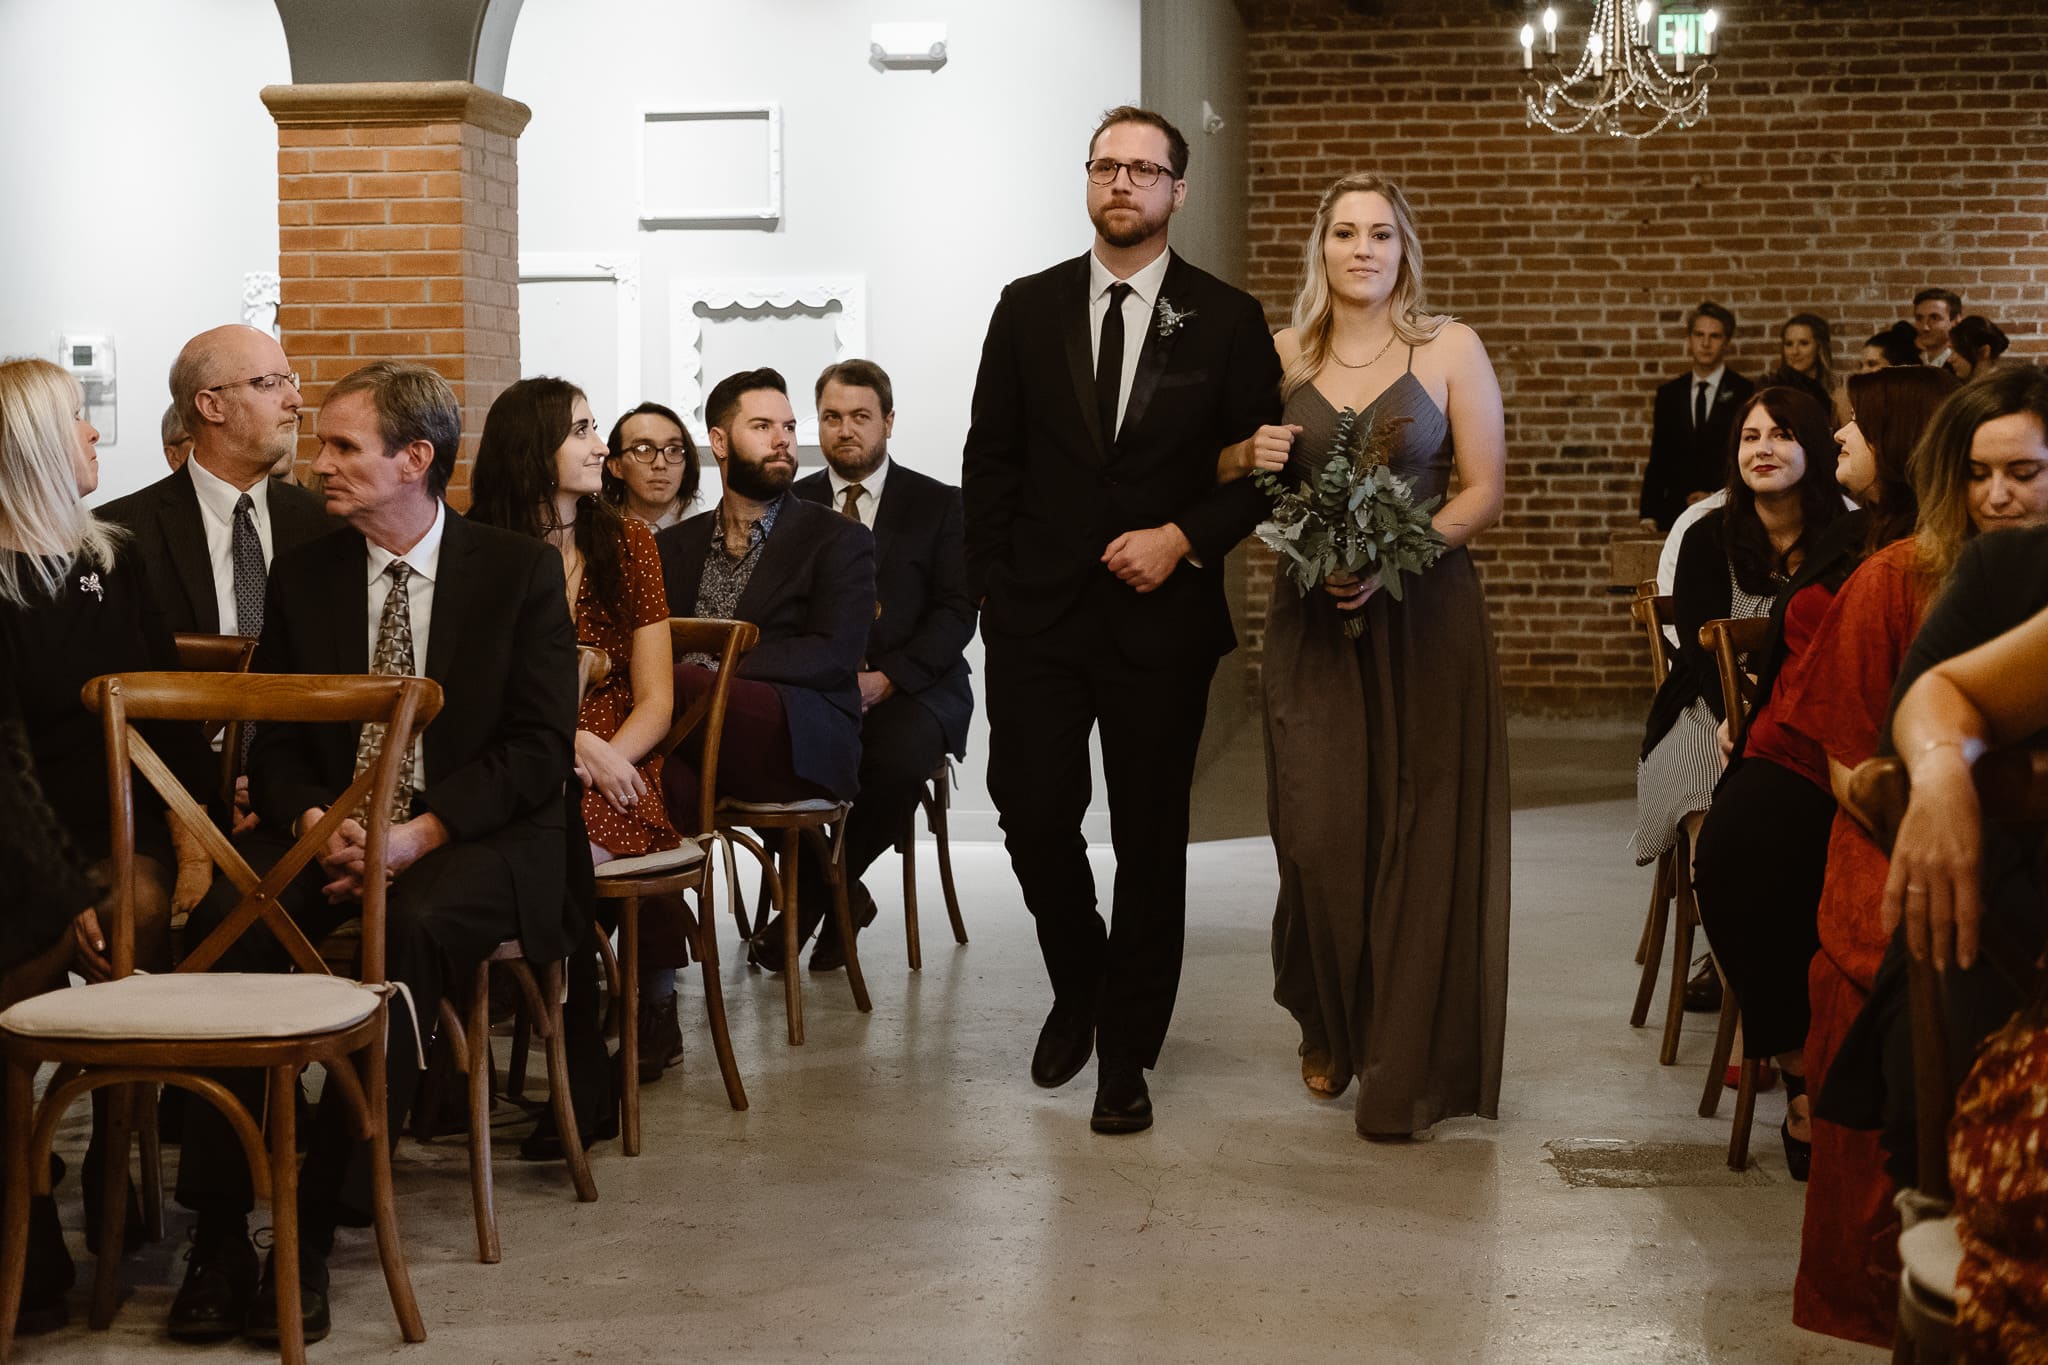 St Vrain Wedding Photographer | Longmont Wedding Photographer | Colorado Winter Wedding Photographer, Colorado industrial chic wedding ceremony, wedding processional